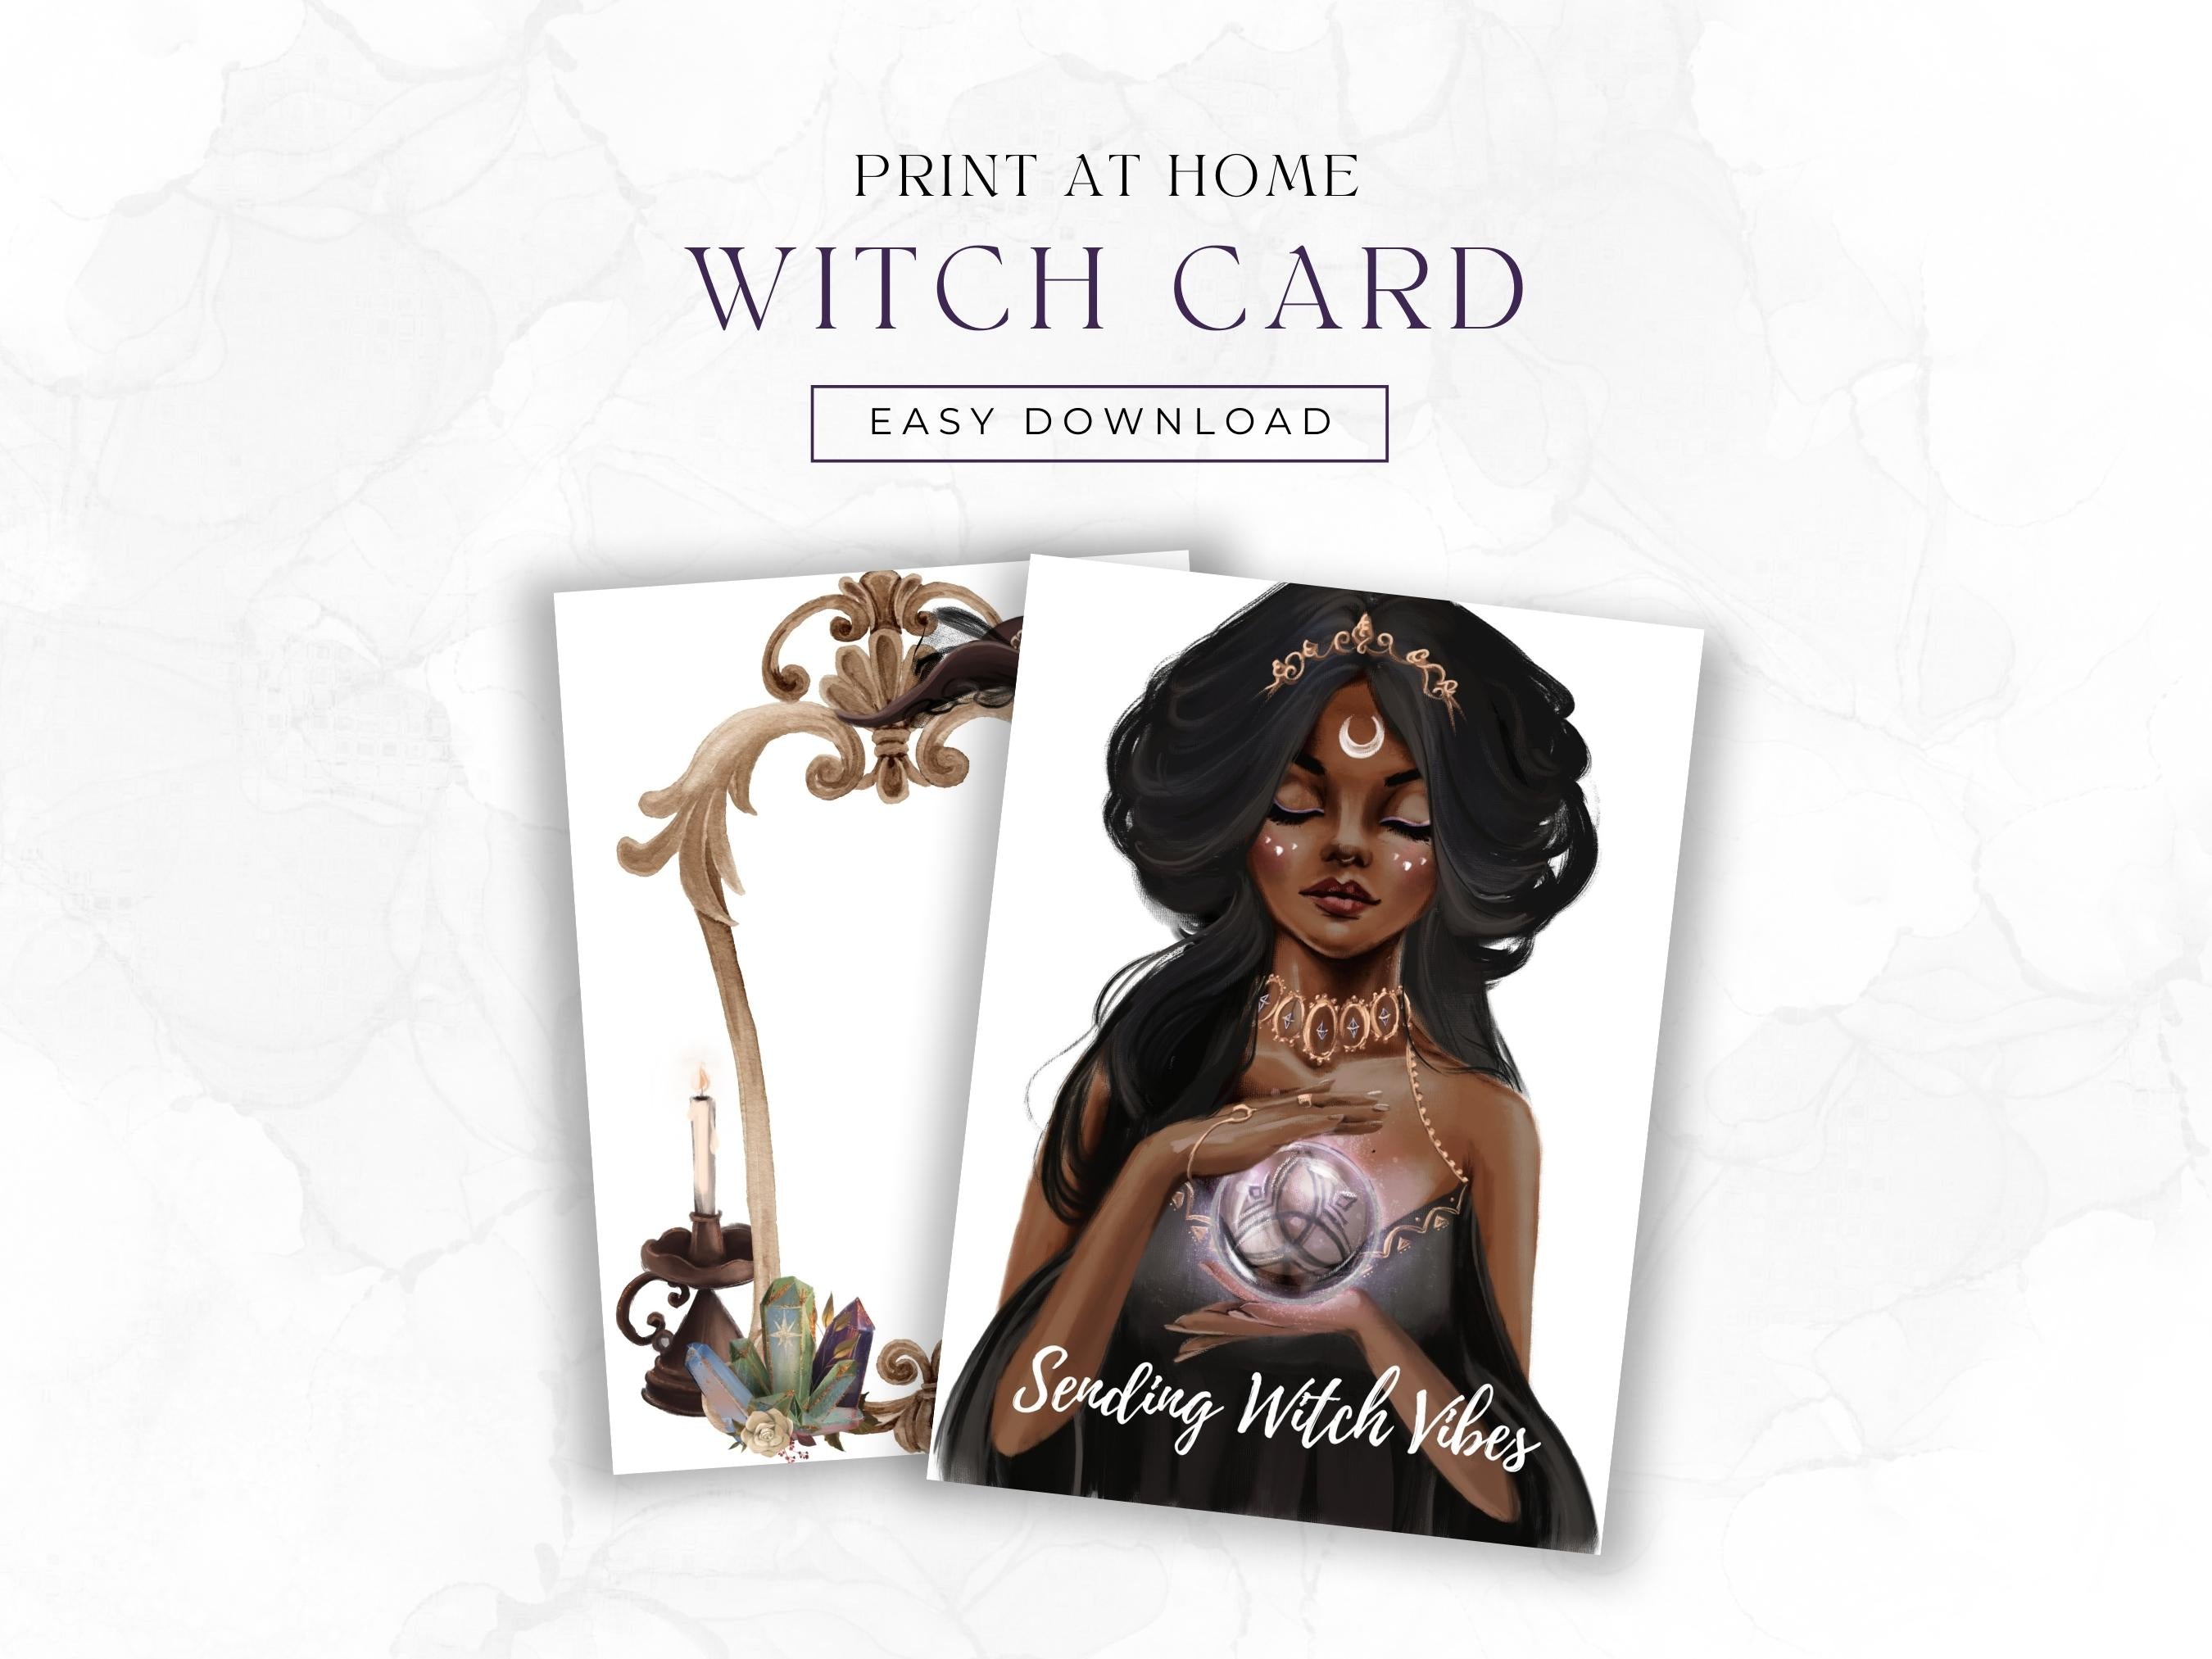 Sending Witch Vibes Postkarte